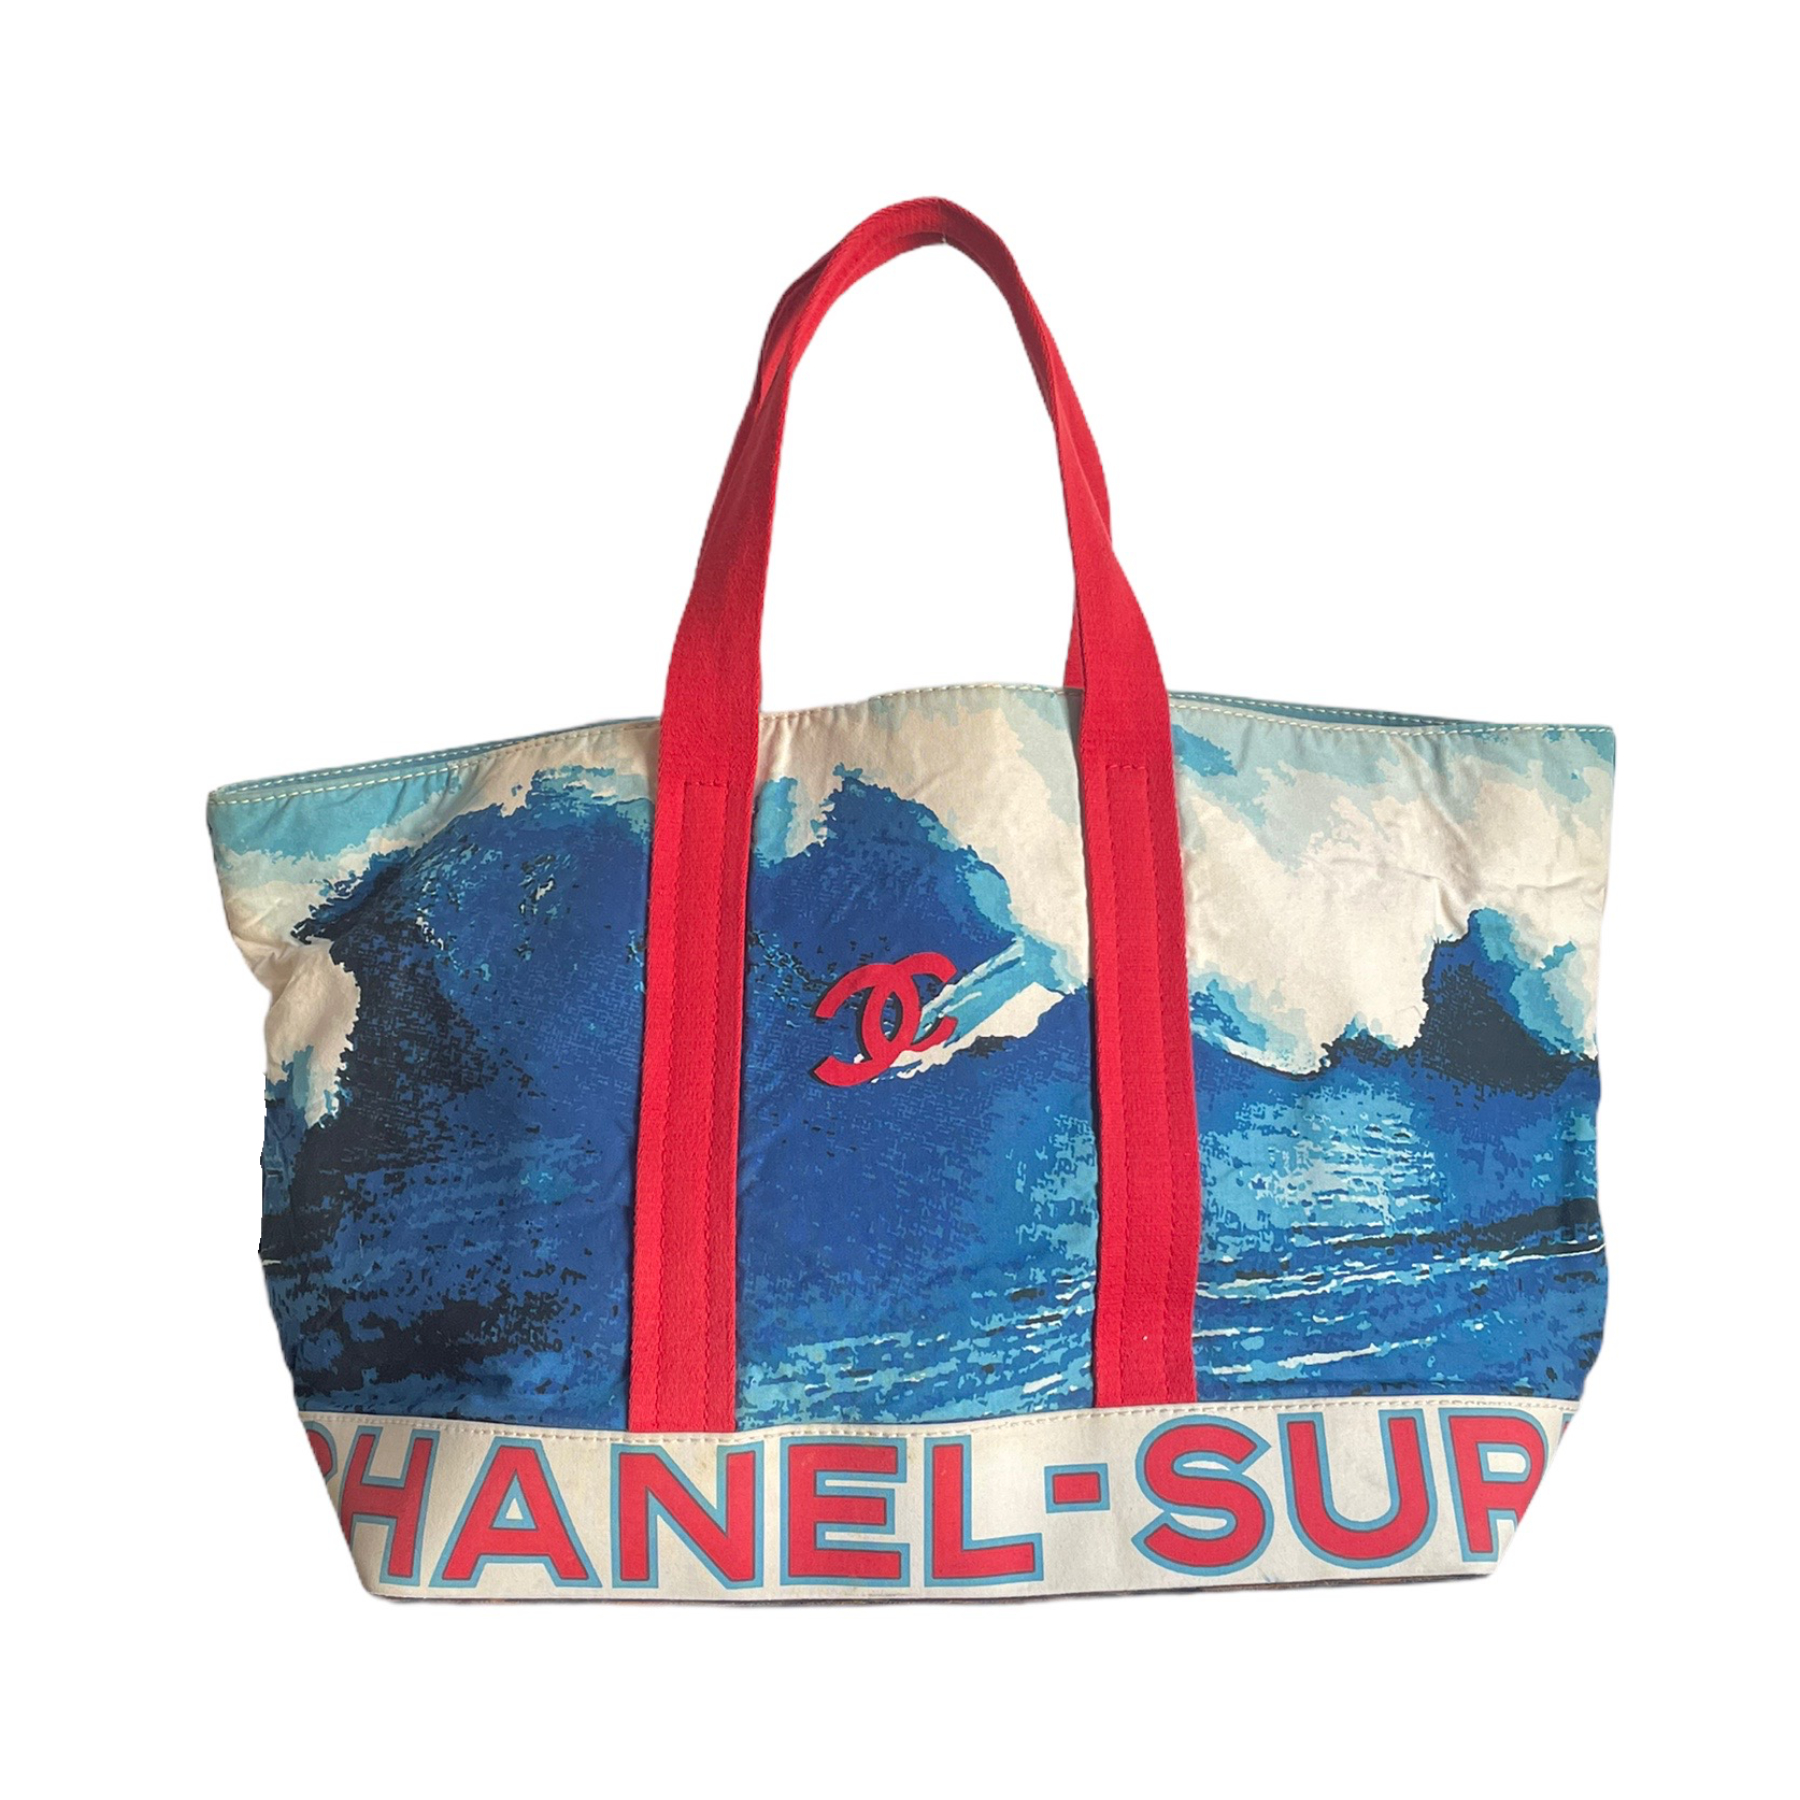 Chanel Surf 2002 Tote Bag